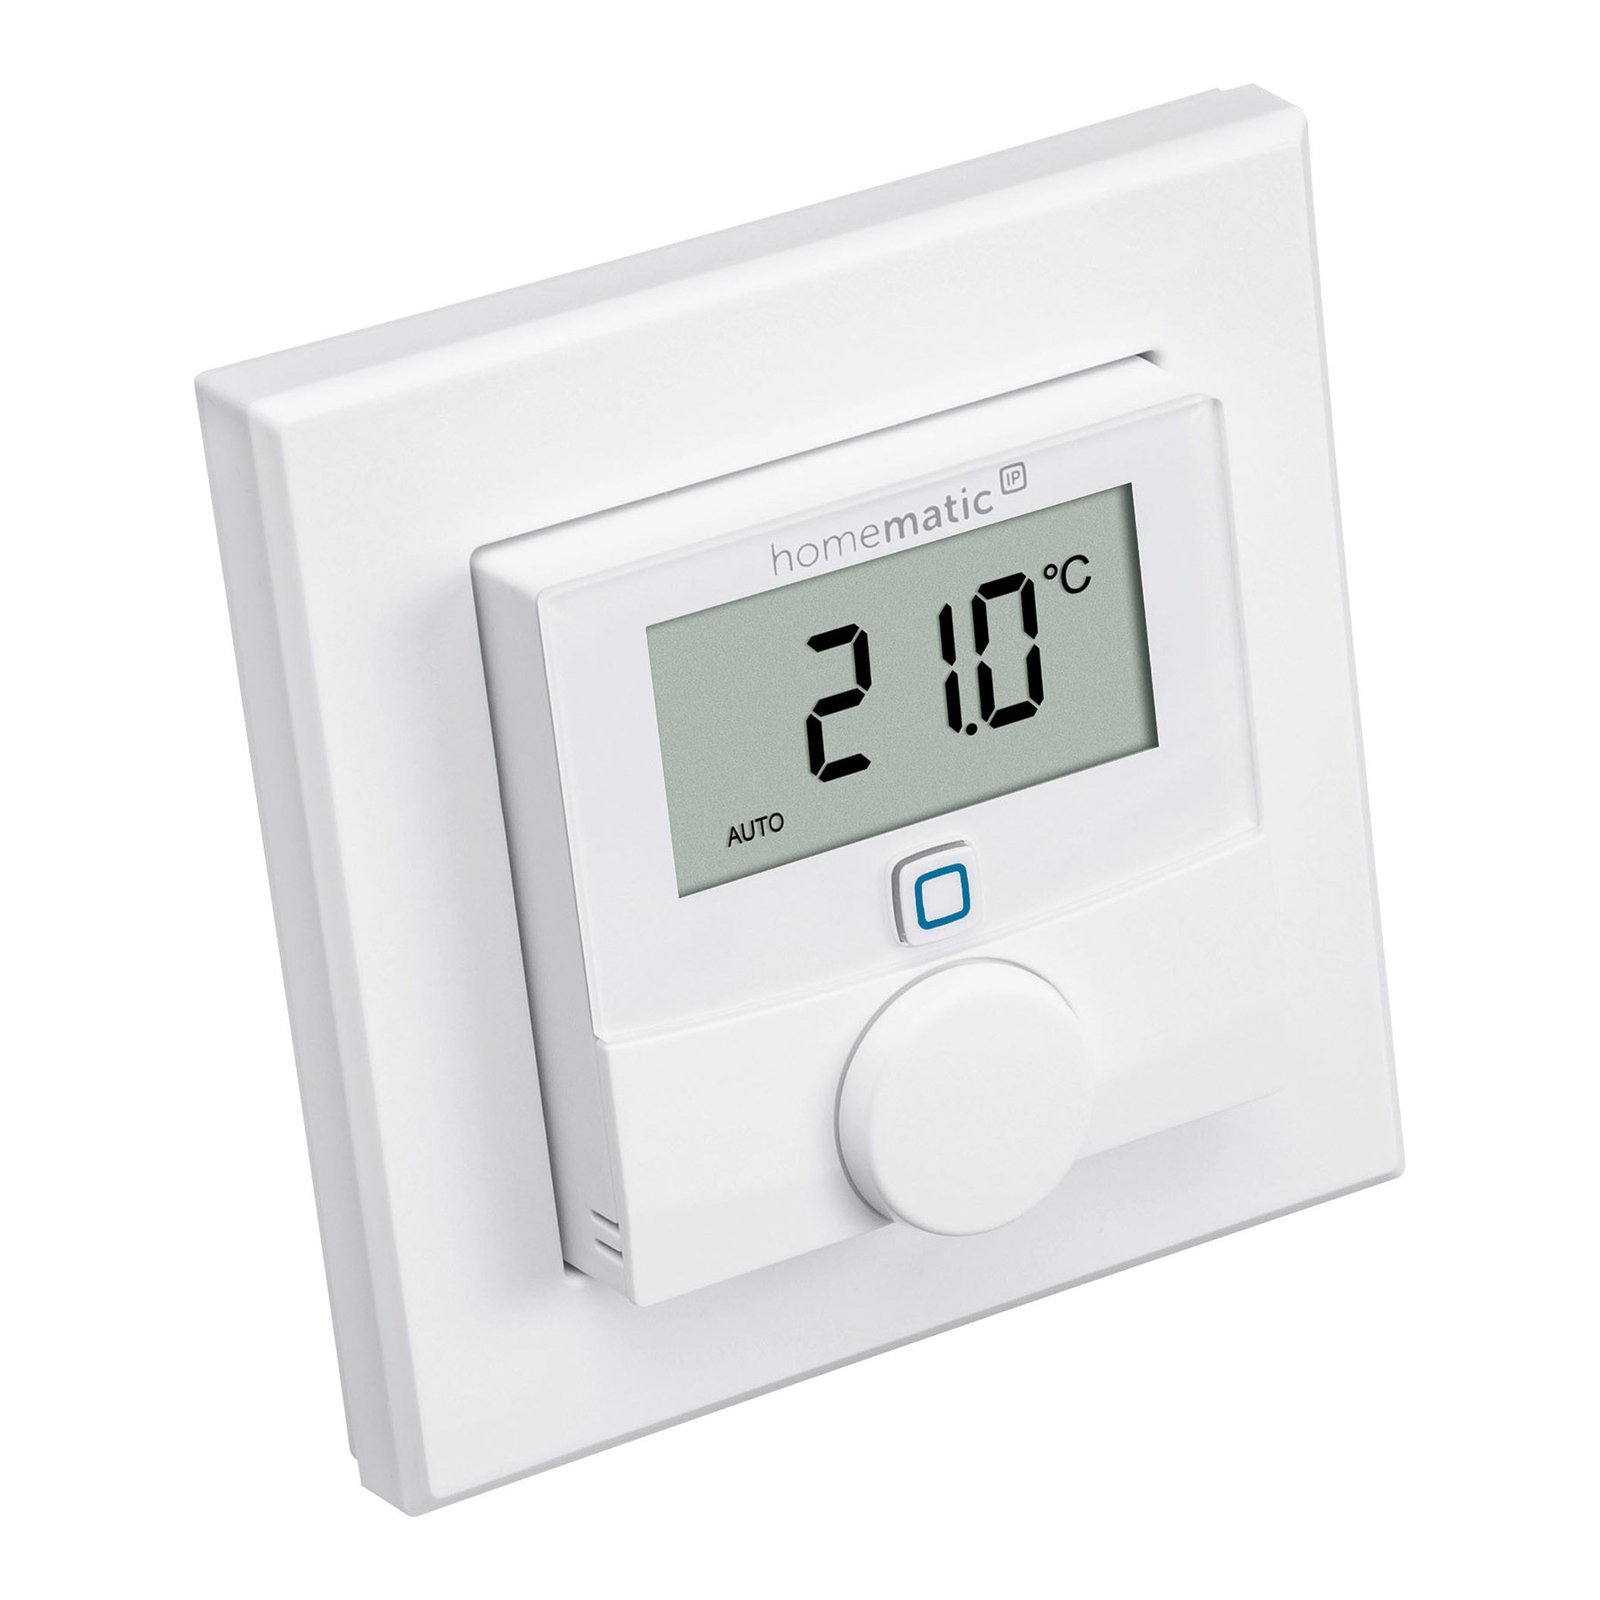 Homematic IP wall thermostat w. humidity sensor